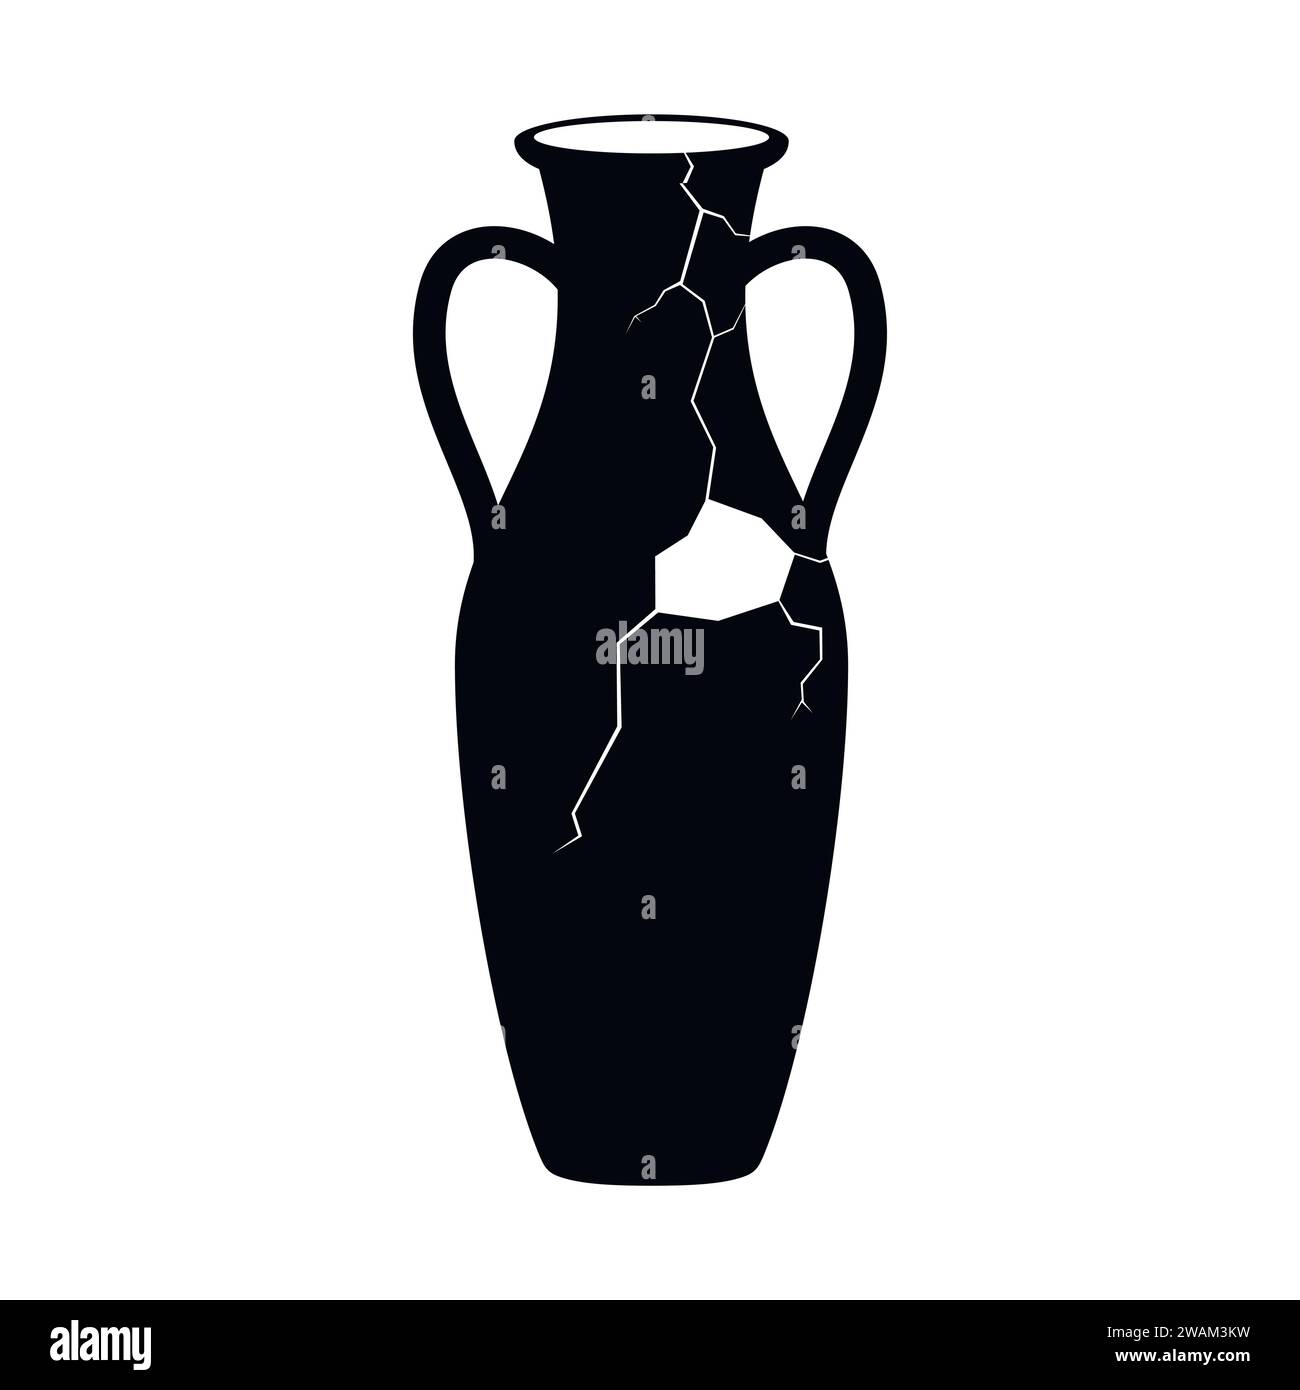 Broken ancient amphora icon with two handles. Antique clay vase jar, Old traditional vintage pot. Ceramic jug archaeological artefact. Greek or Roman Stock Vector